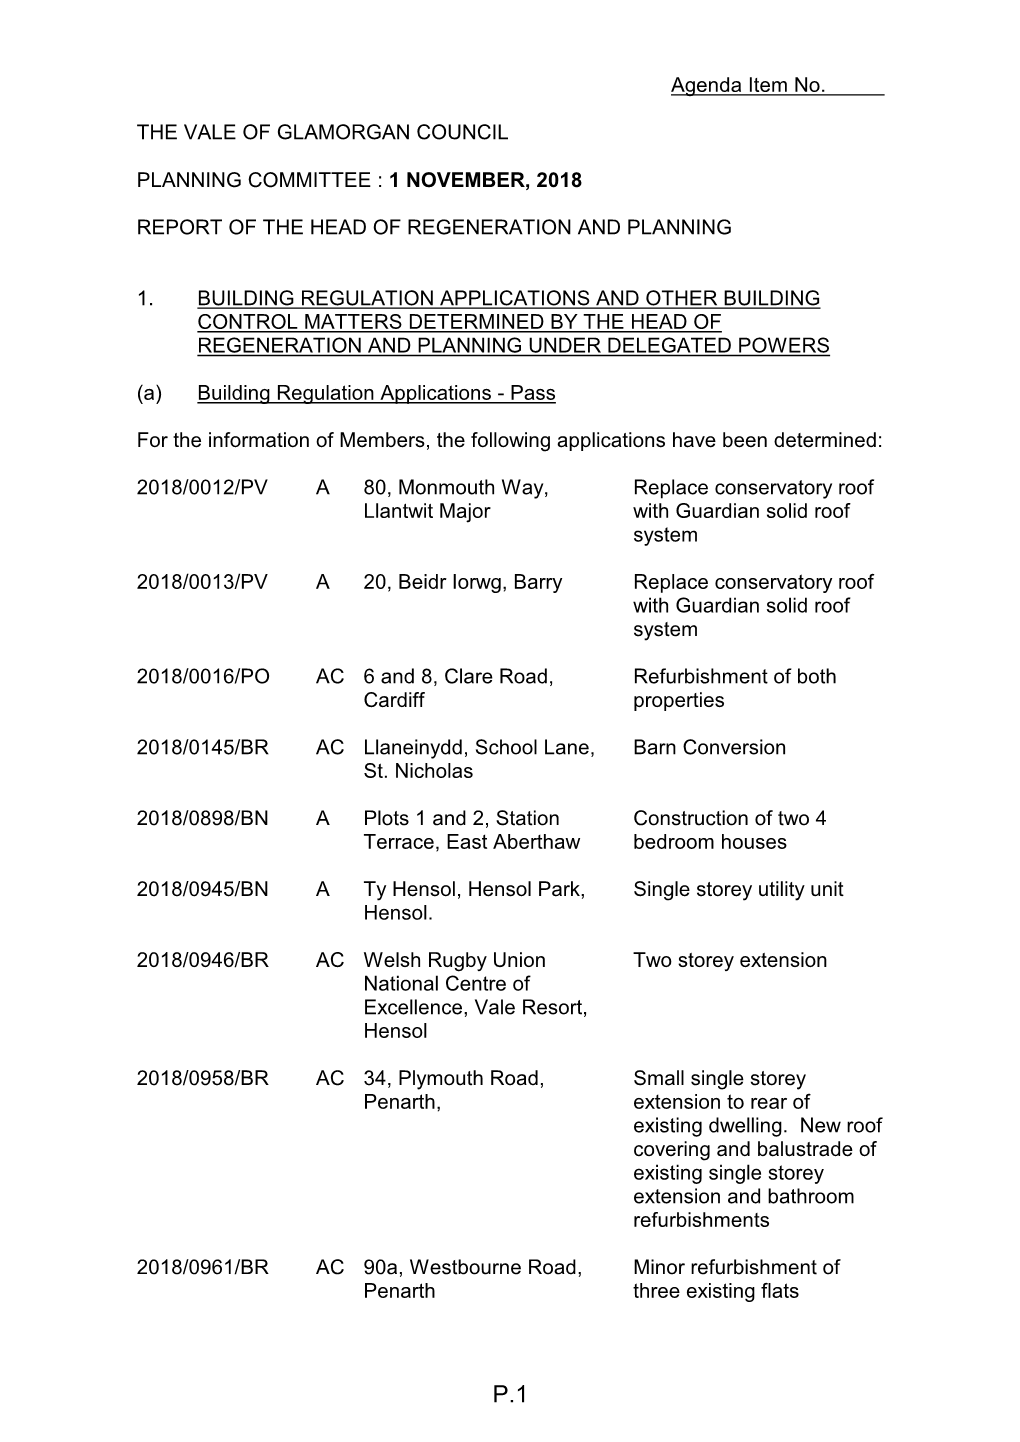 Planning Committee Agenda 01 November 2018